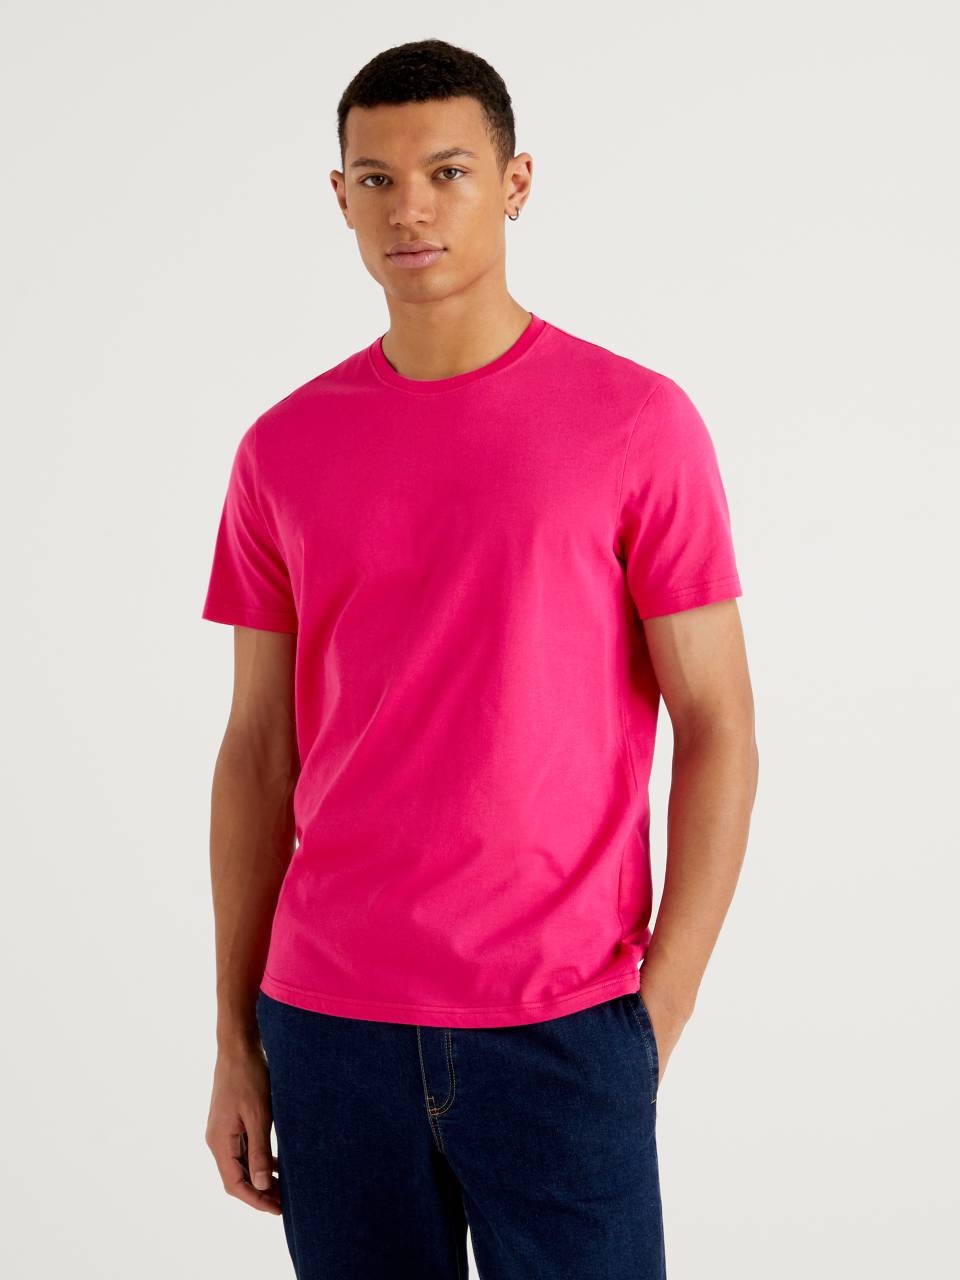 T-shirt with print Color fuchsia - SINSAY - 5793F-43X